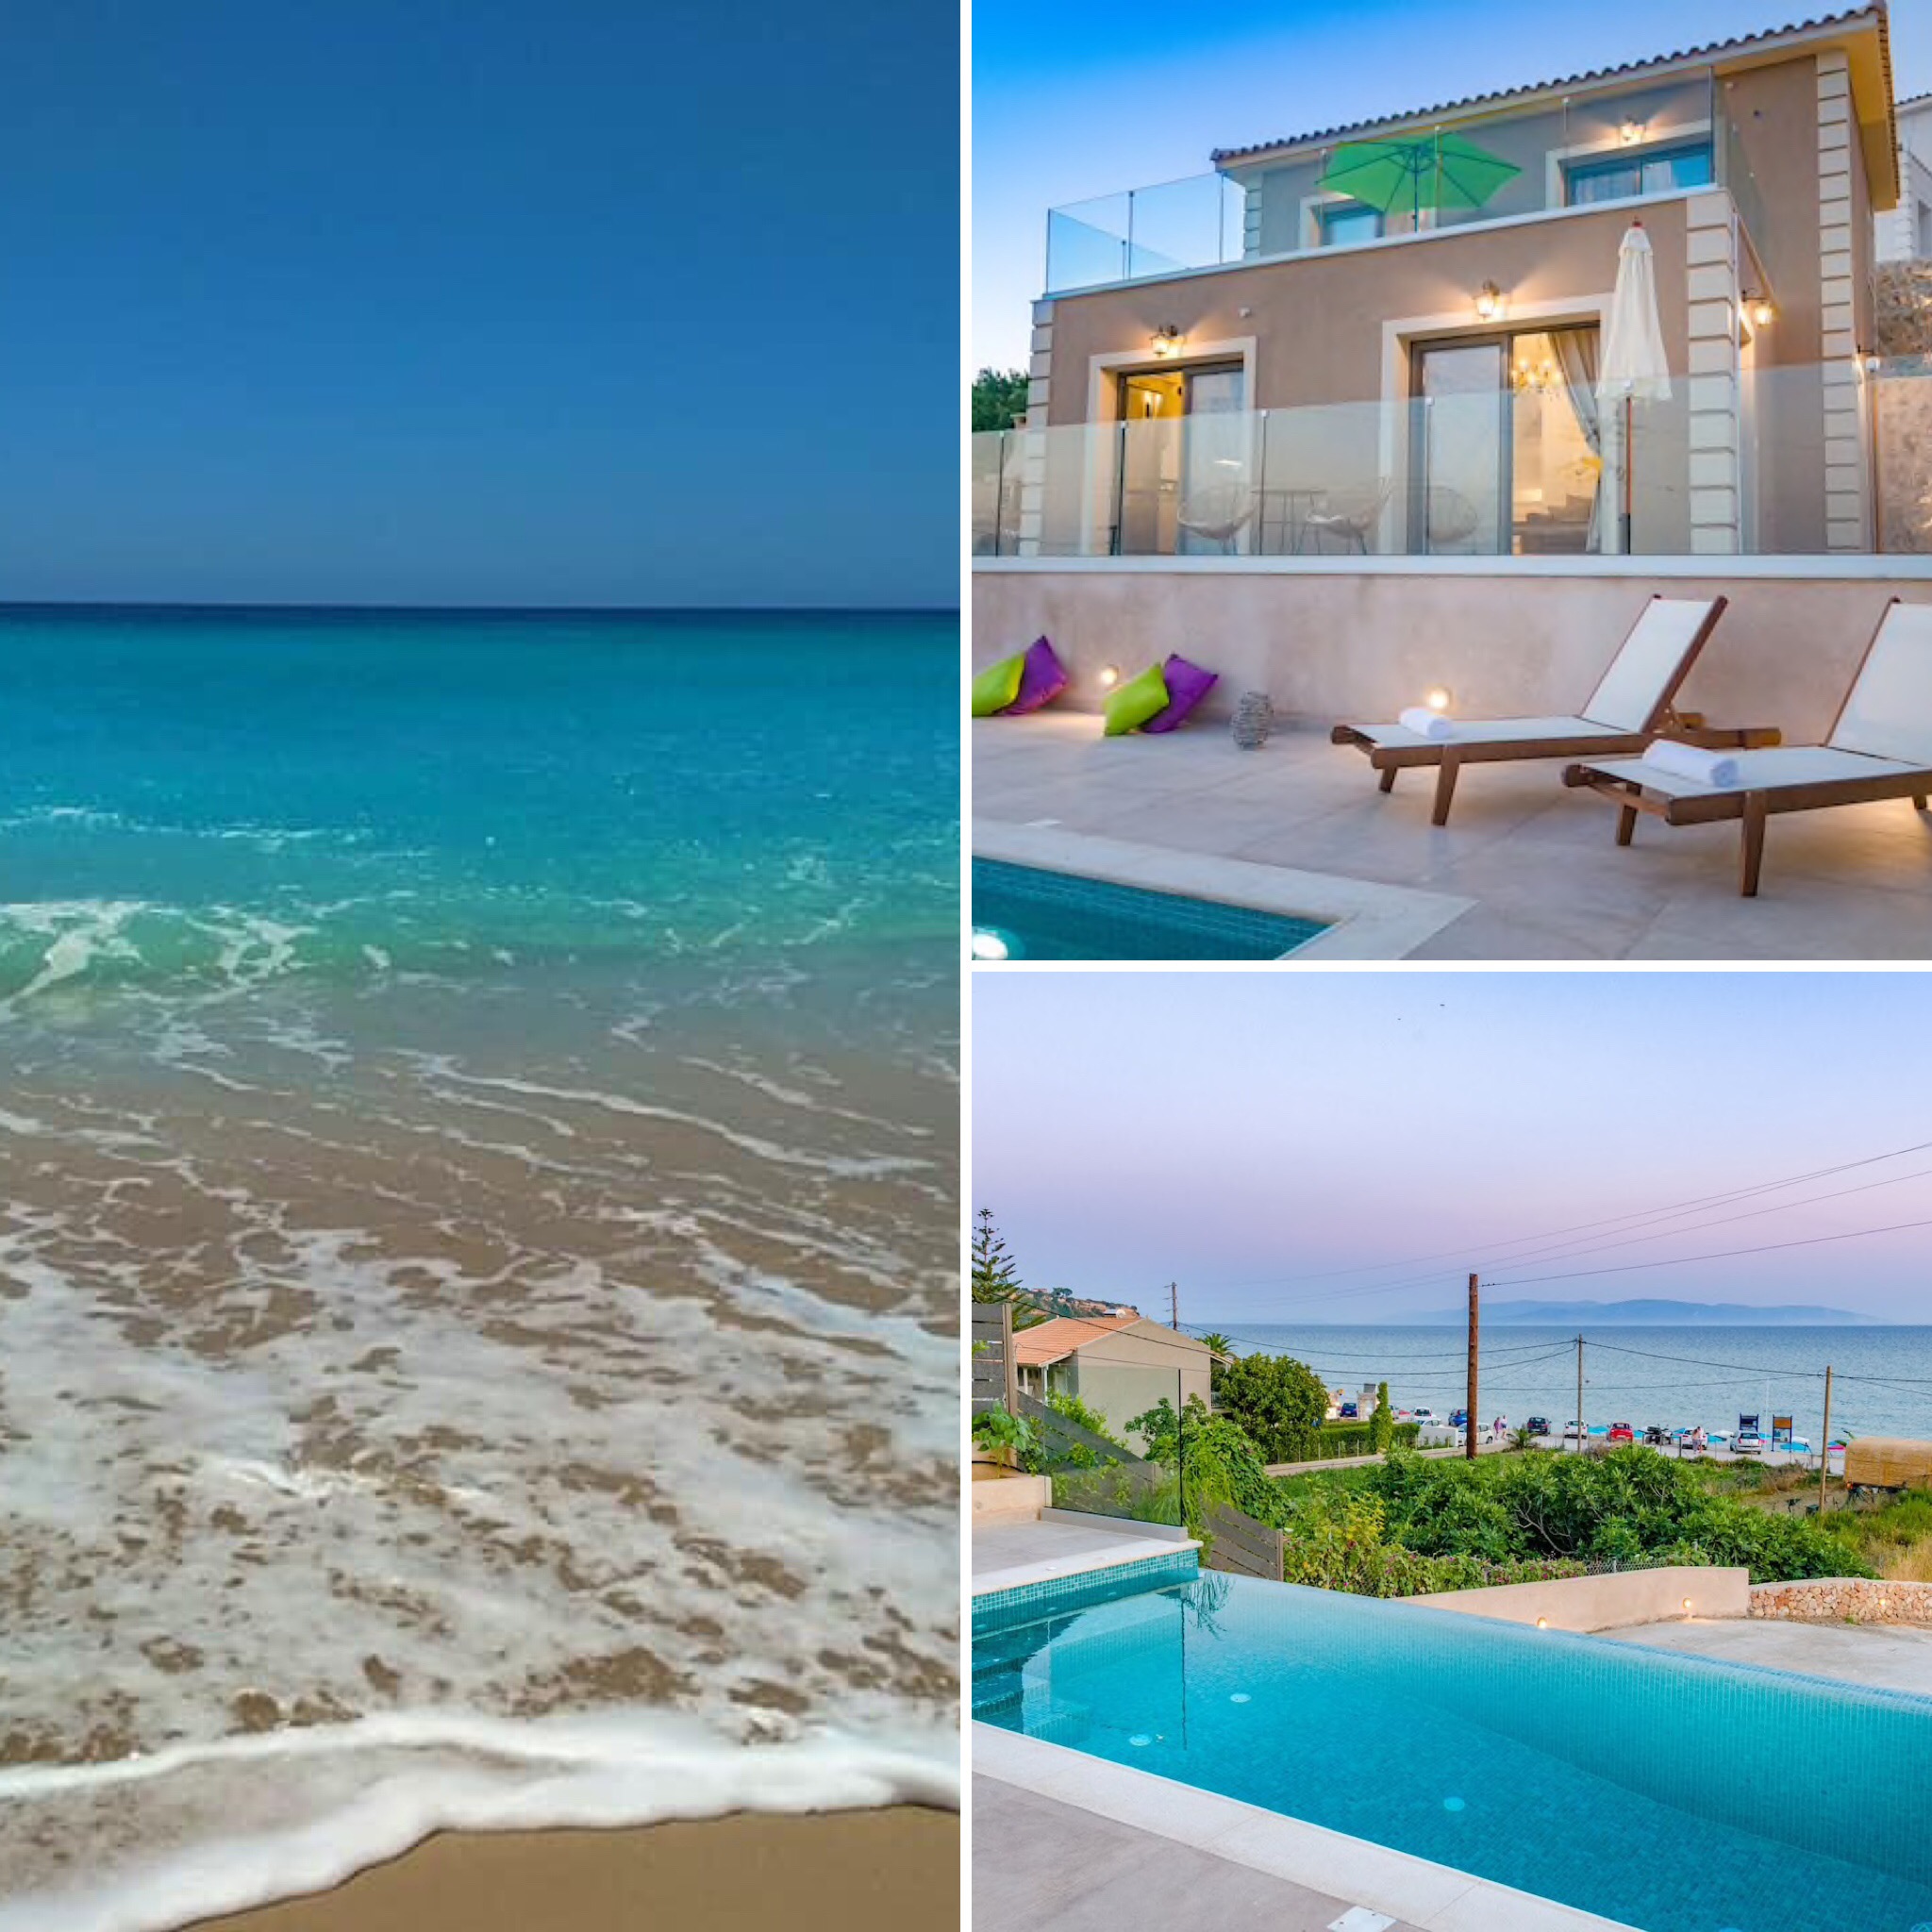 Kefalonia villas: luxury 2 bedroom villa with private pool by Lourdas beach, Kefalonia, Greece. Kefalonia holidays.